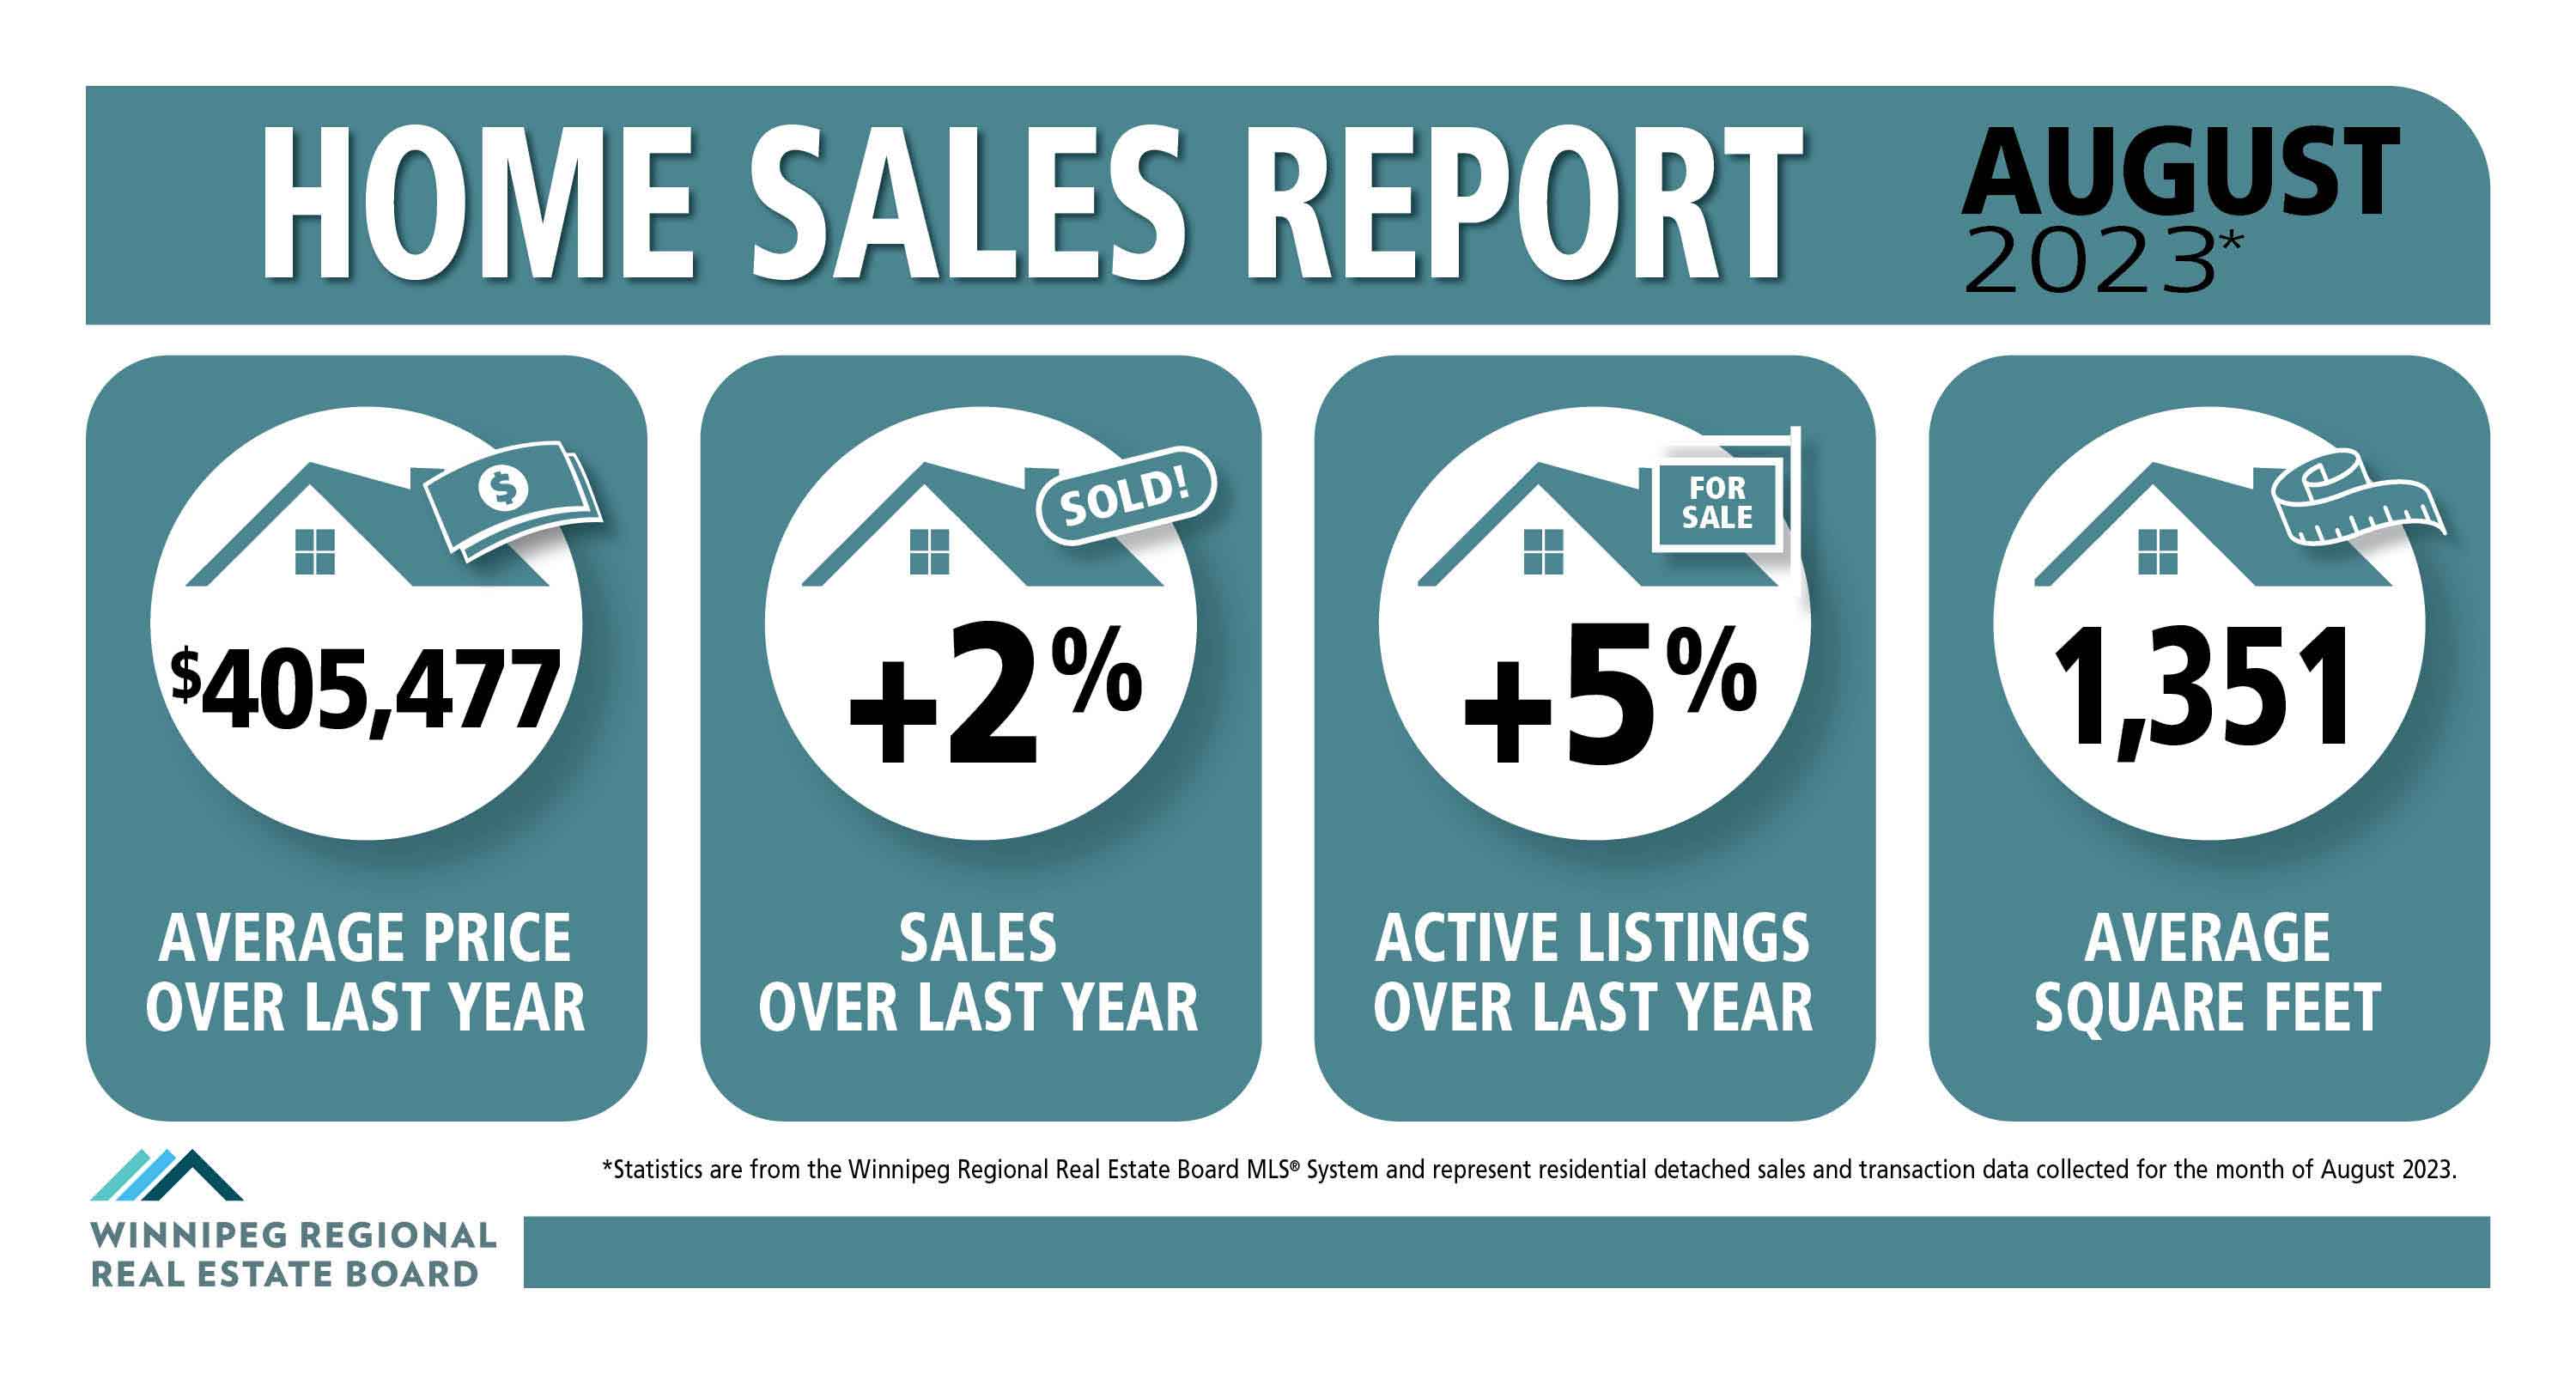 Home Sales Report Aug 2023.jpg (174 KB)